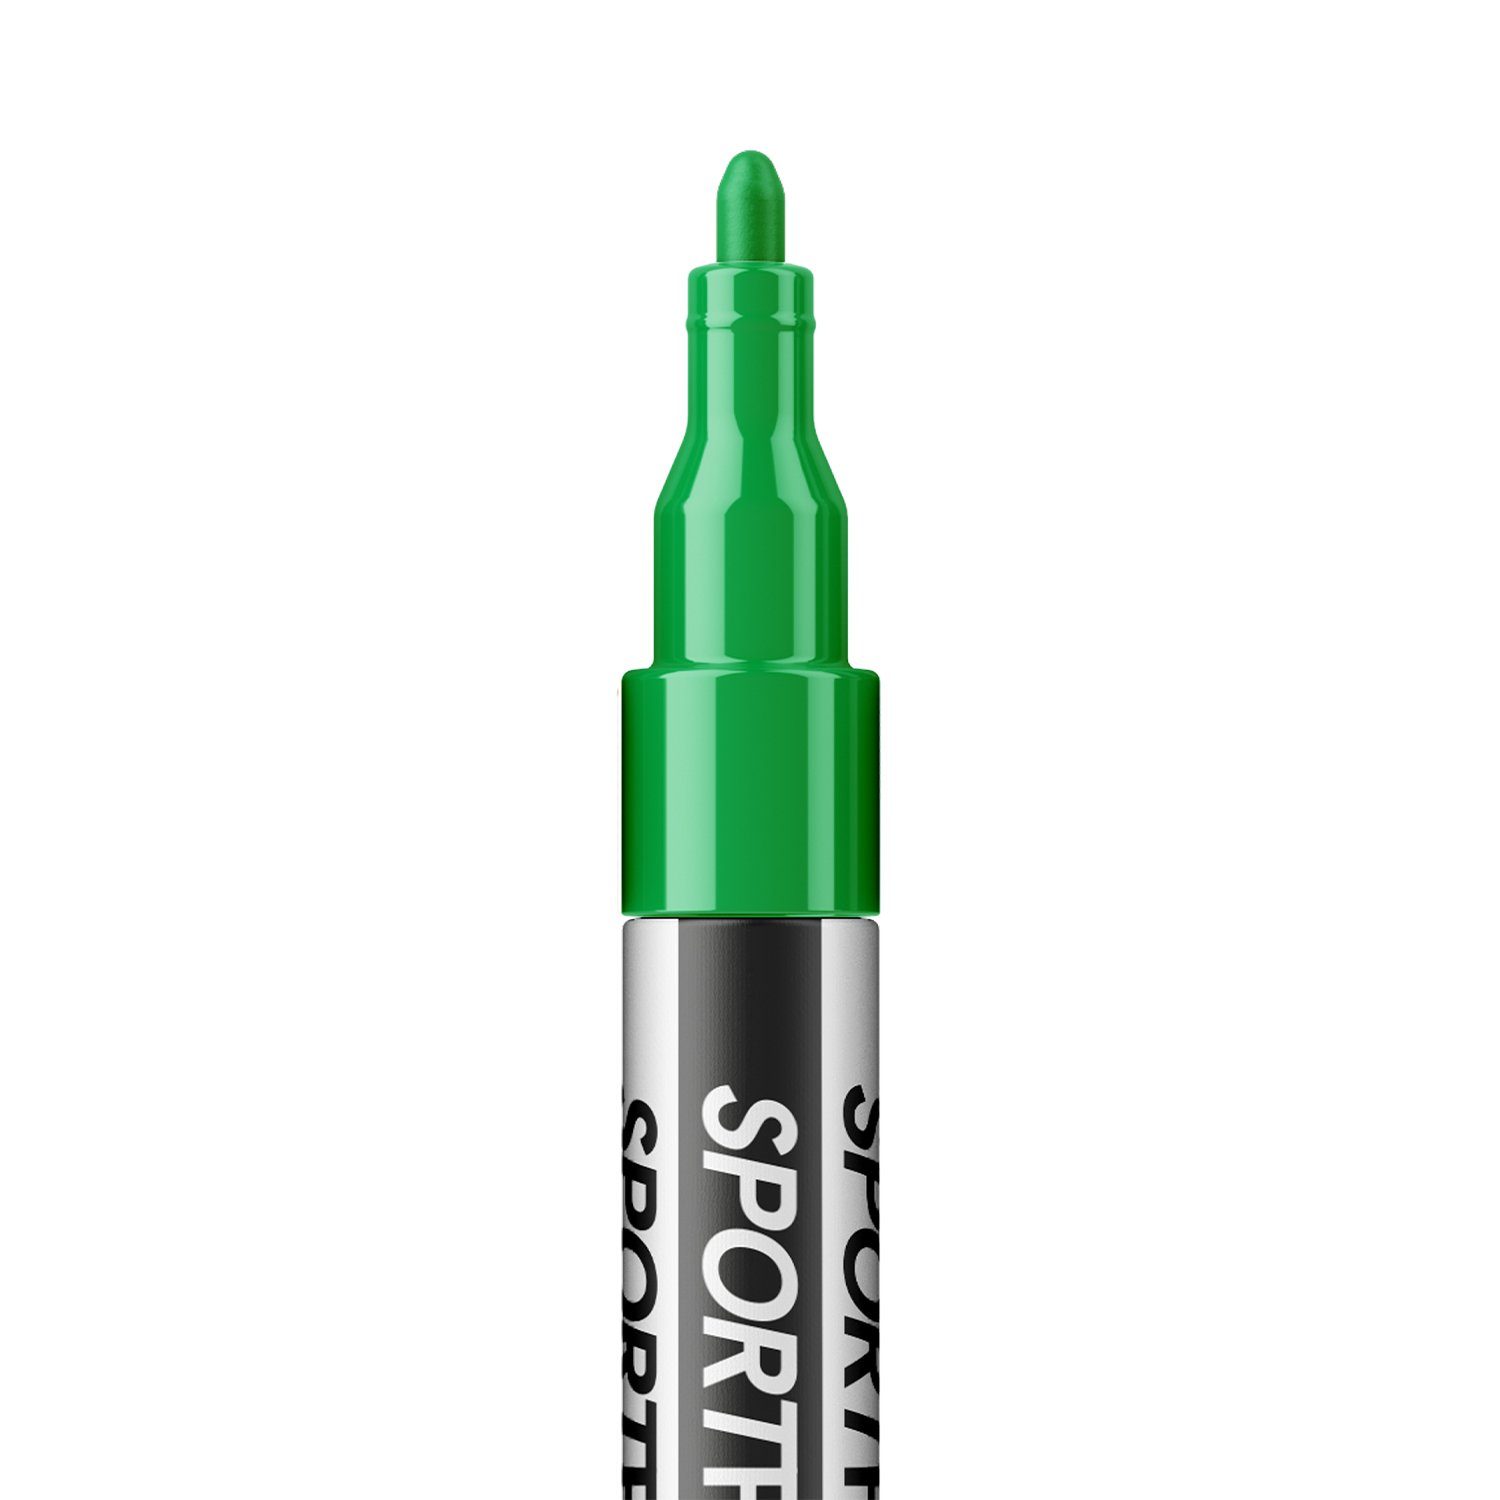 Green Spray.Bike - Standard Marker deckender Multimarker Lackmarker, SportPens Acrylstift wasserfester